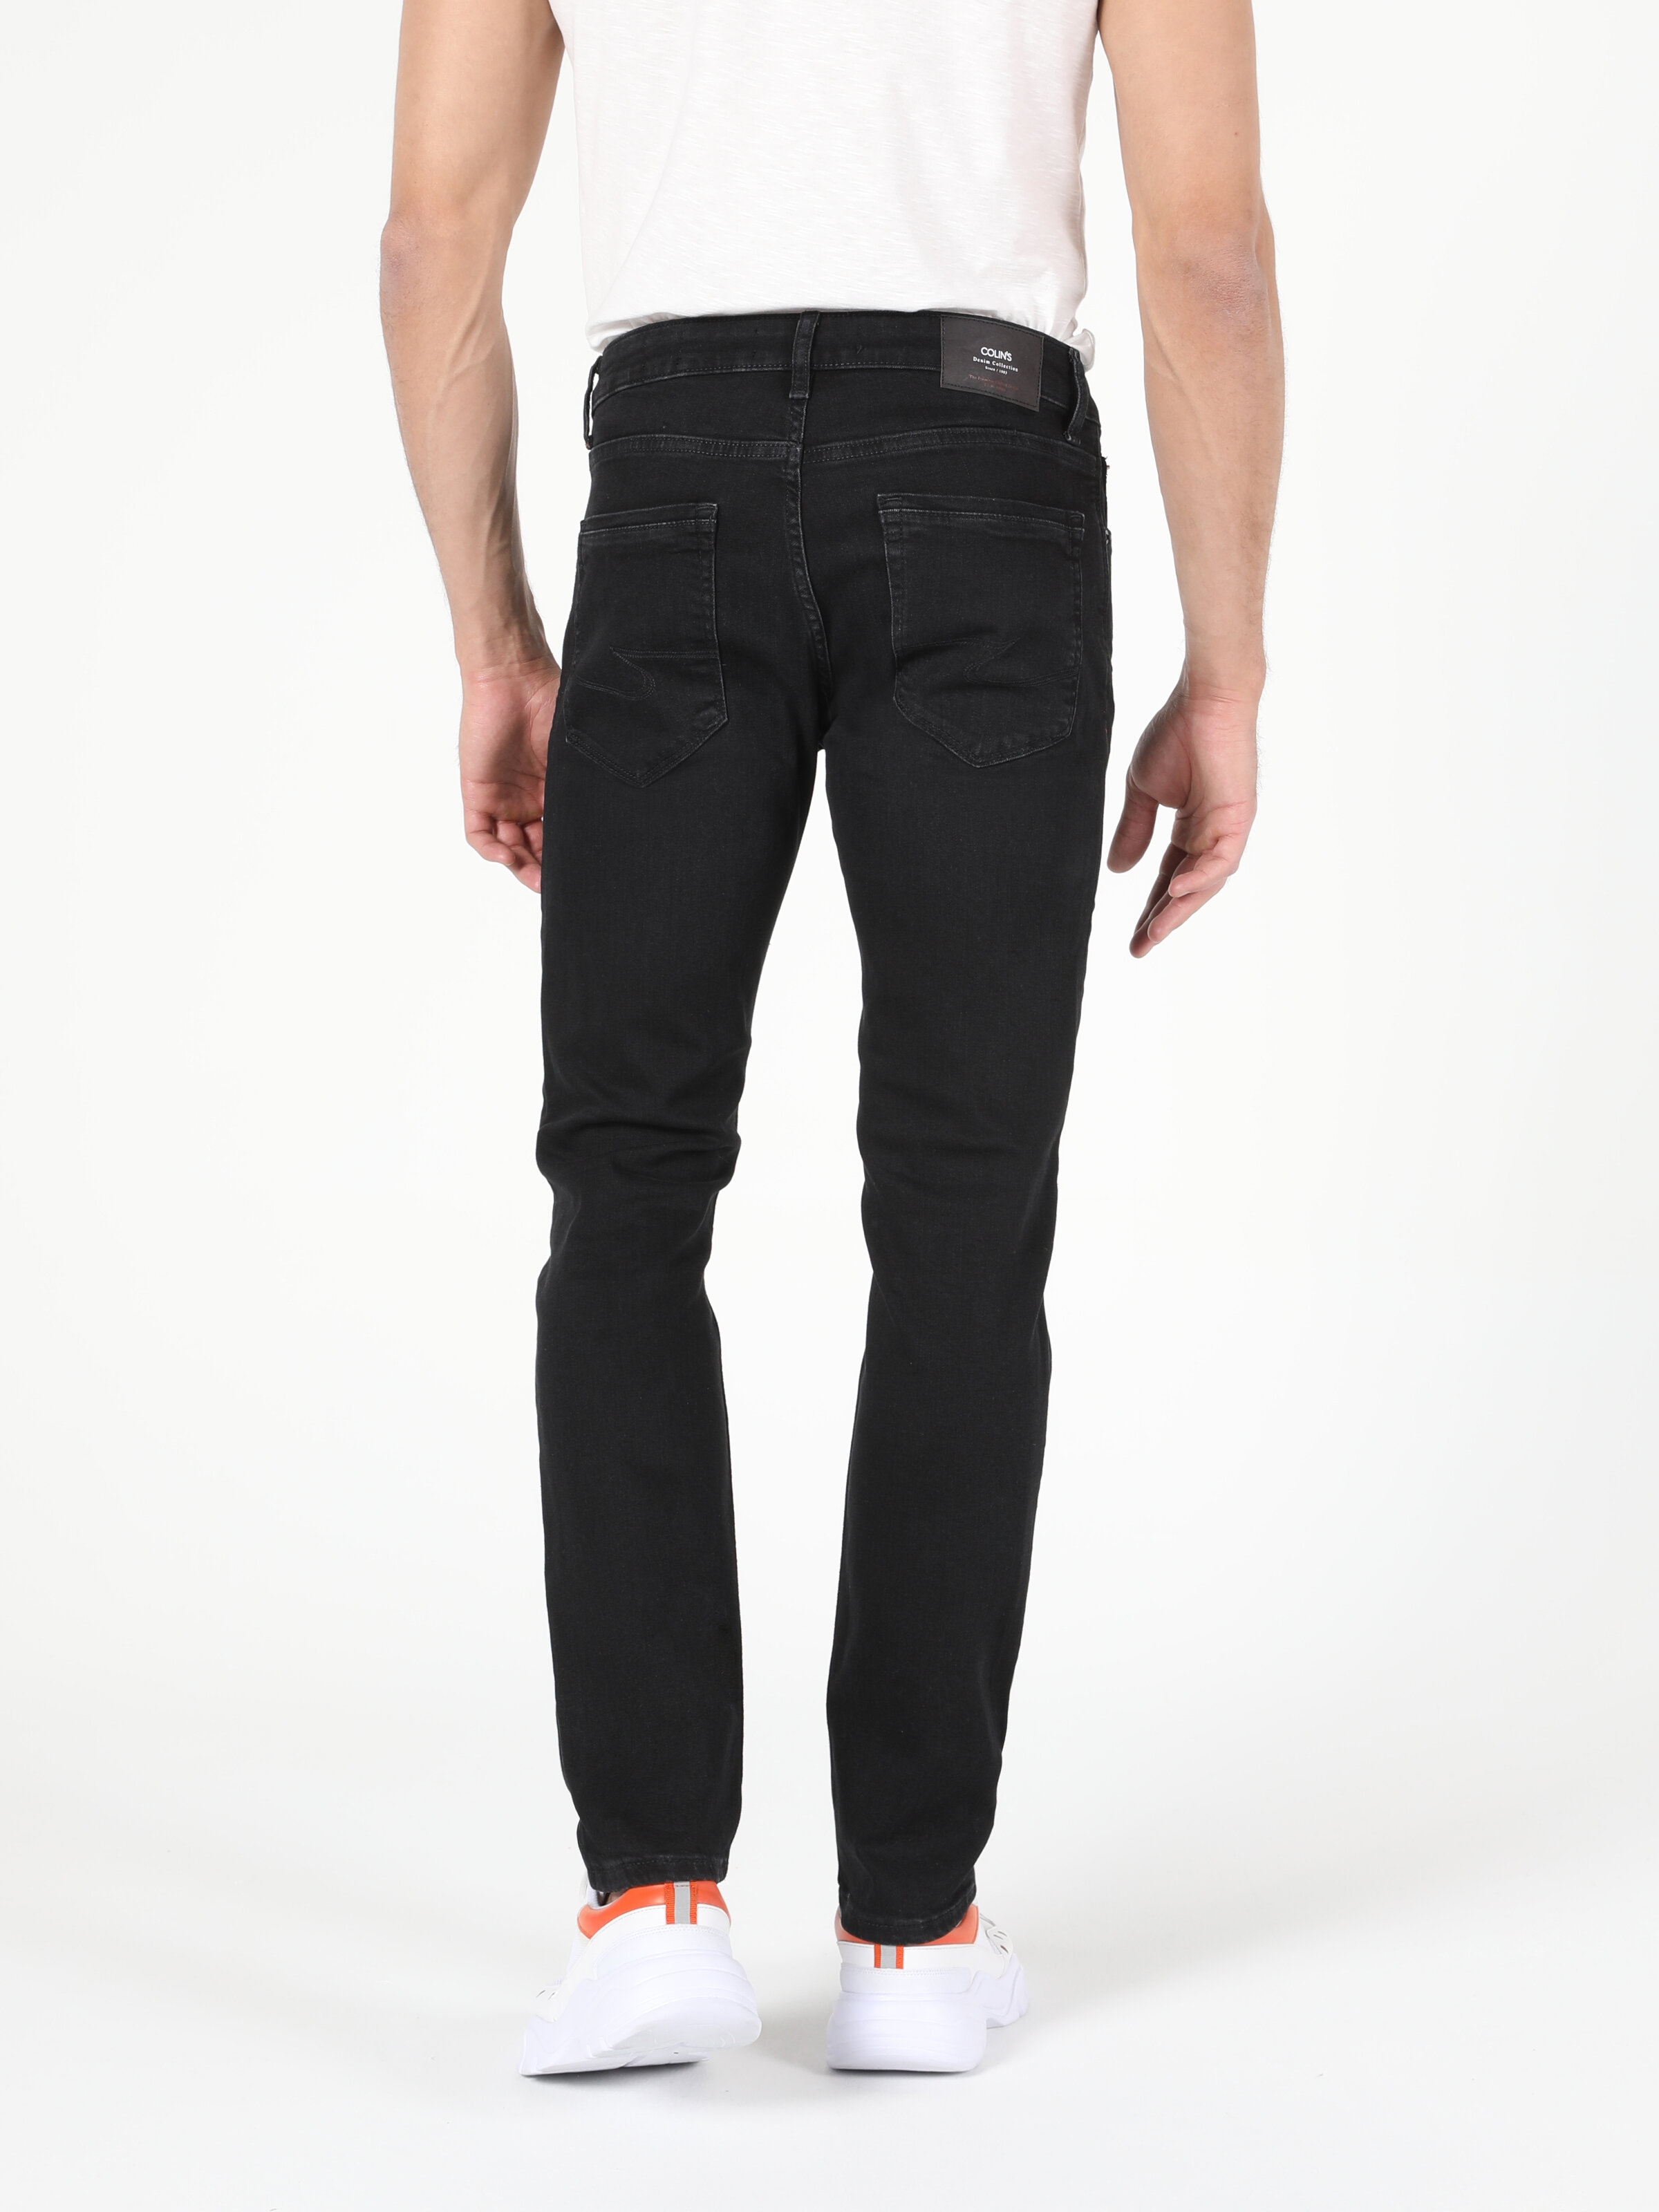 Afișați detalii pentru Pantaloni De Barbati Negru Straight Fit 044 Karl